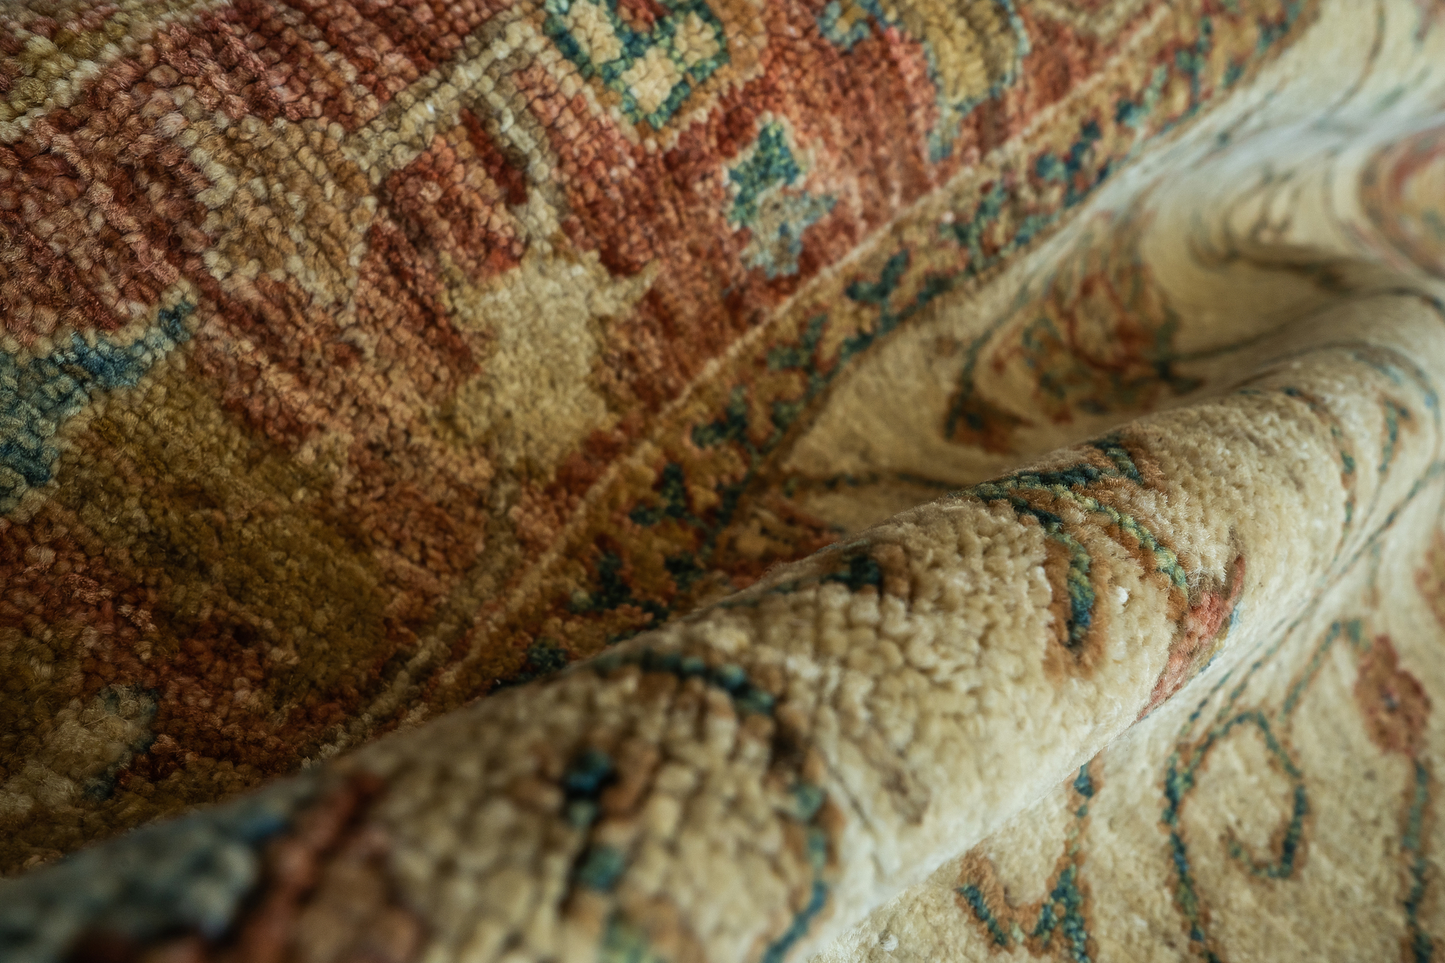 Oriental carpet "Ziegler" 152 x 97 cm - Farhadian.com